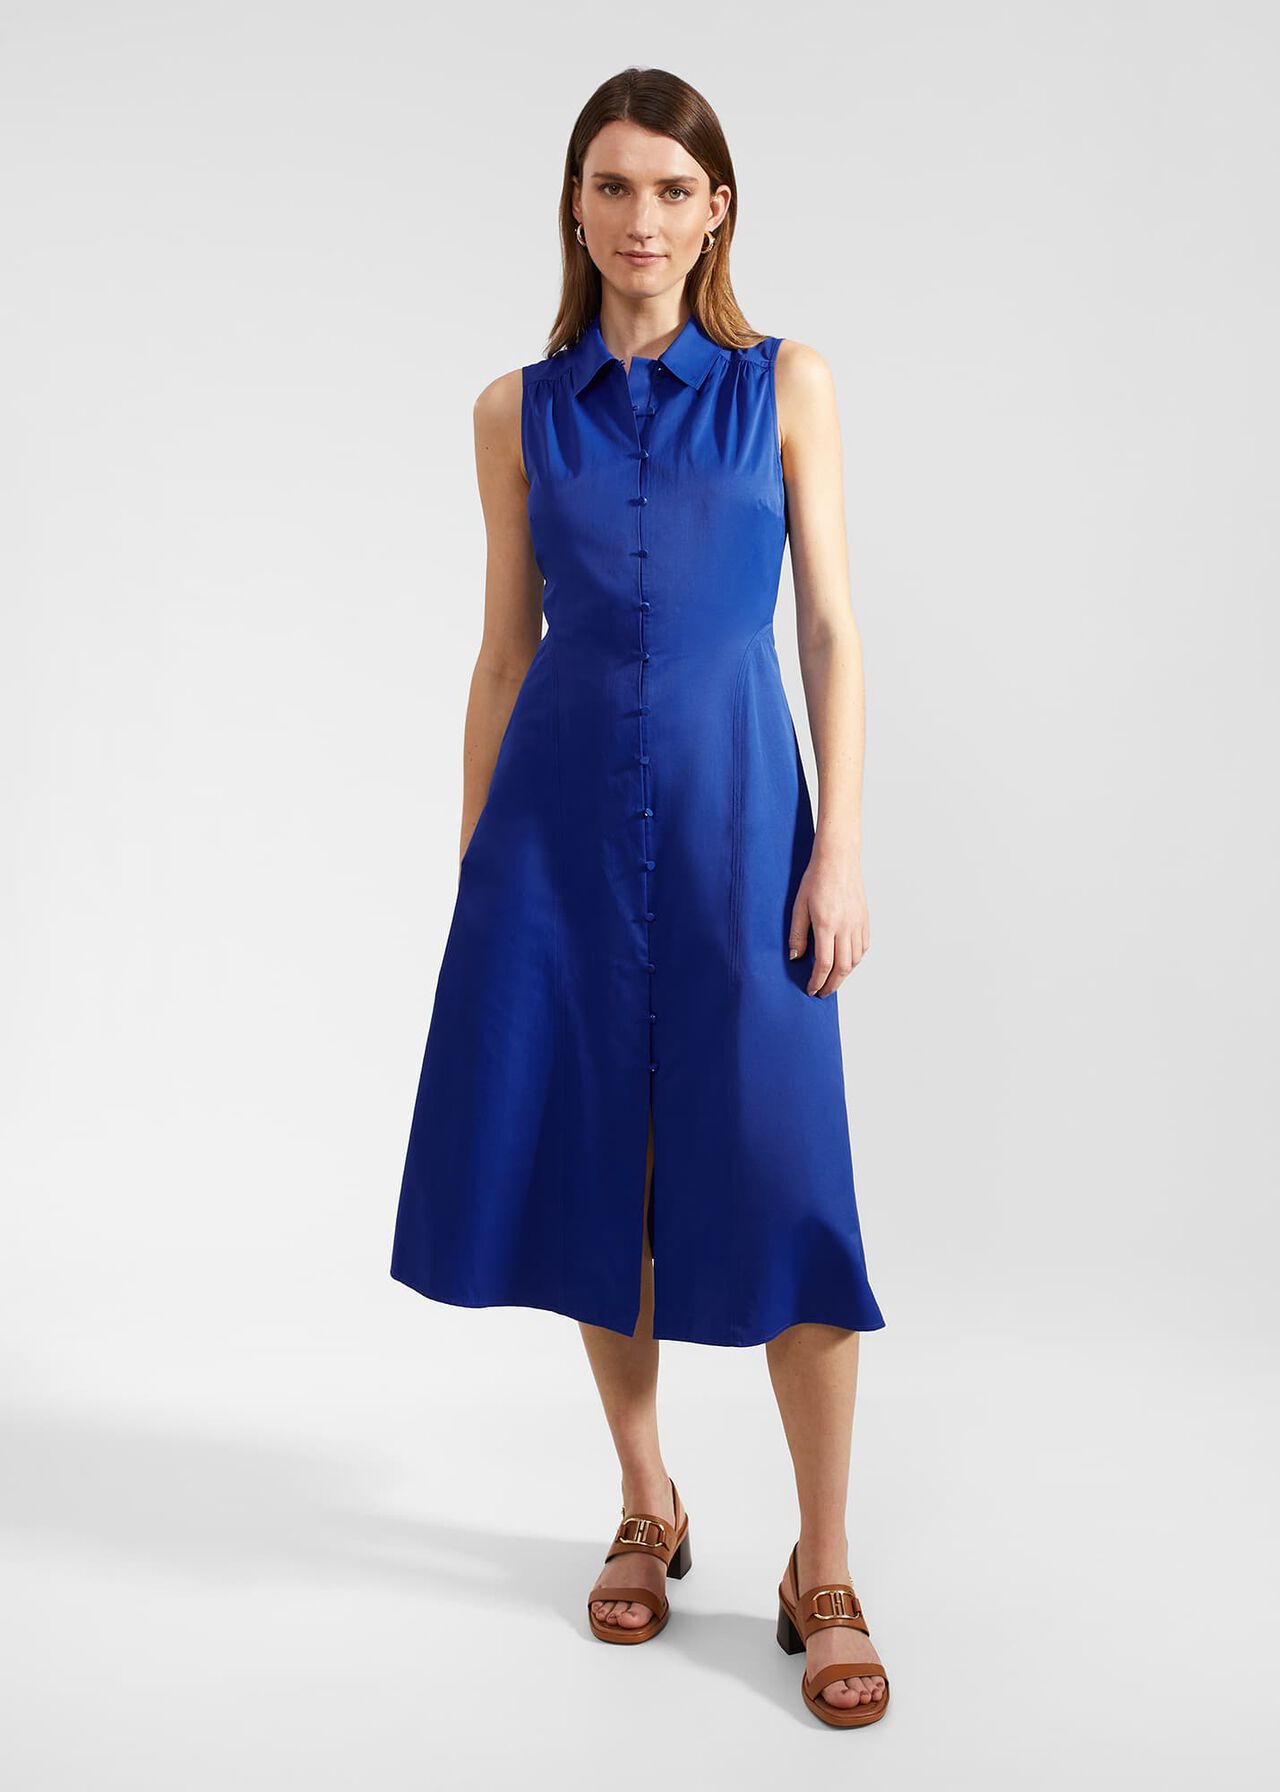 Cathleen Dress With Cotton | Hobbs UK